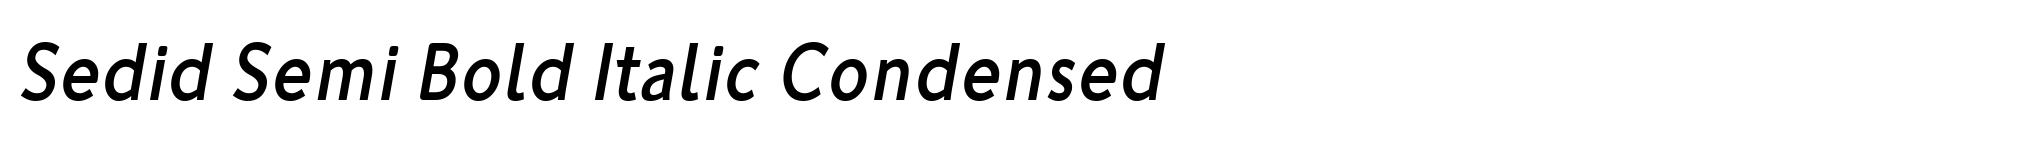 Sedid Semi Bold Italic Condensed image